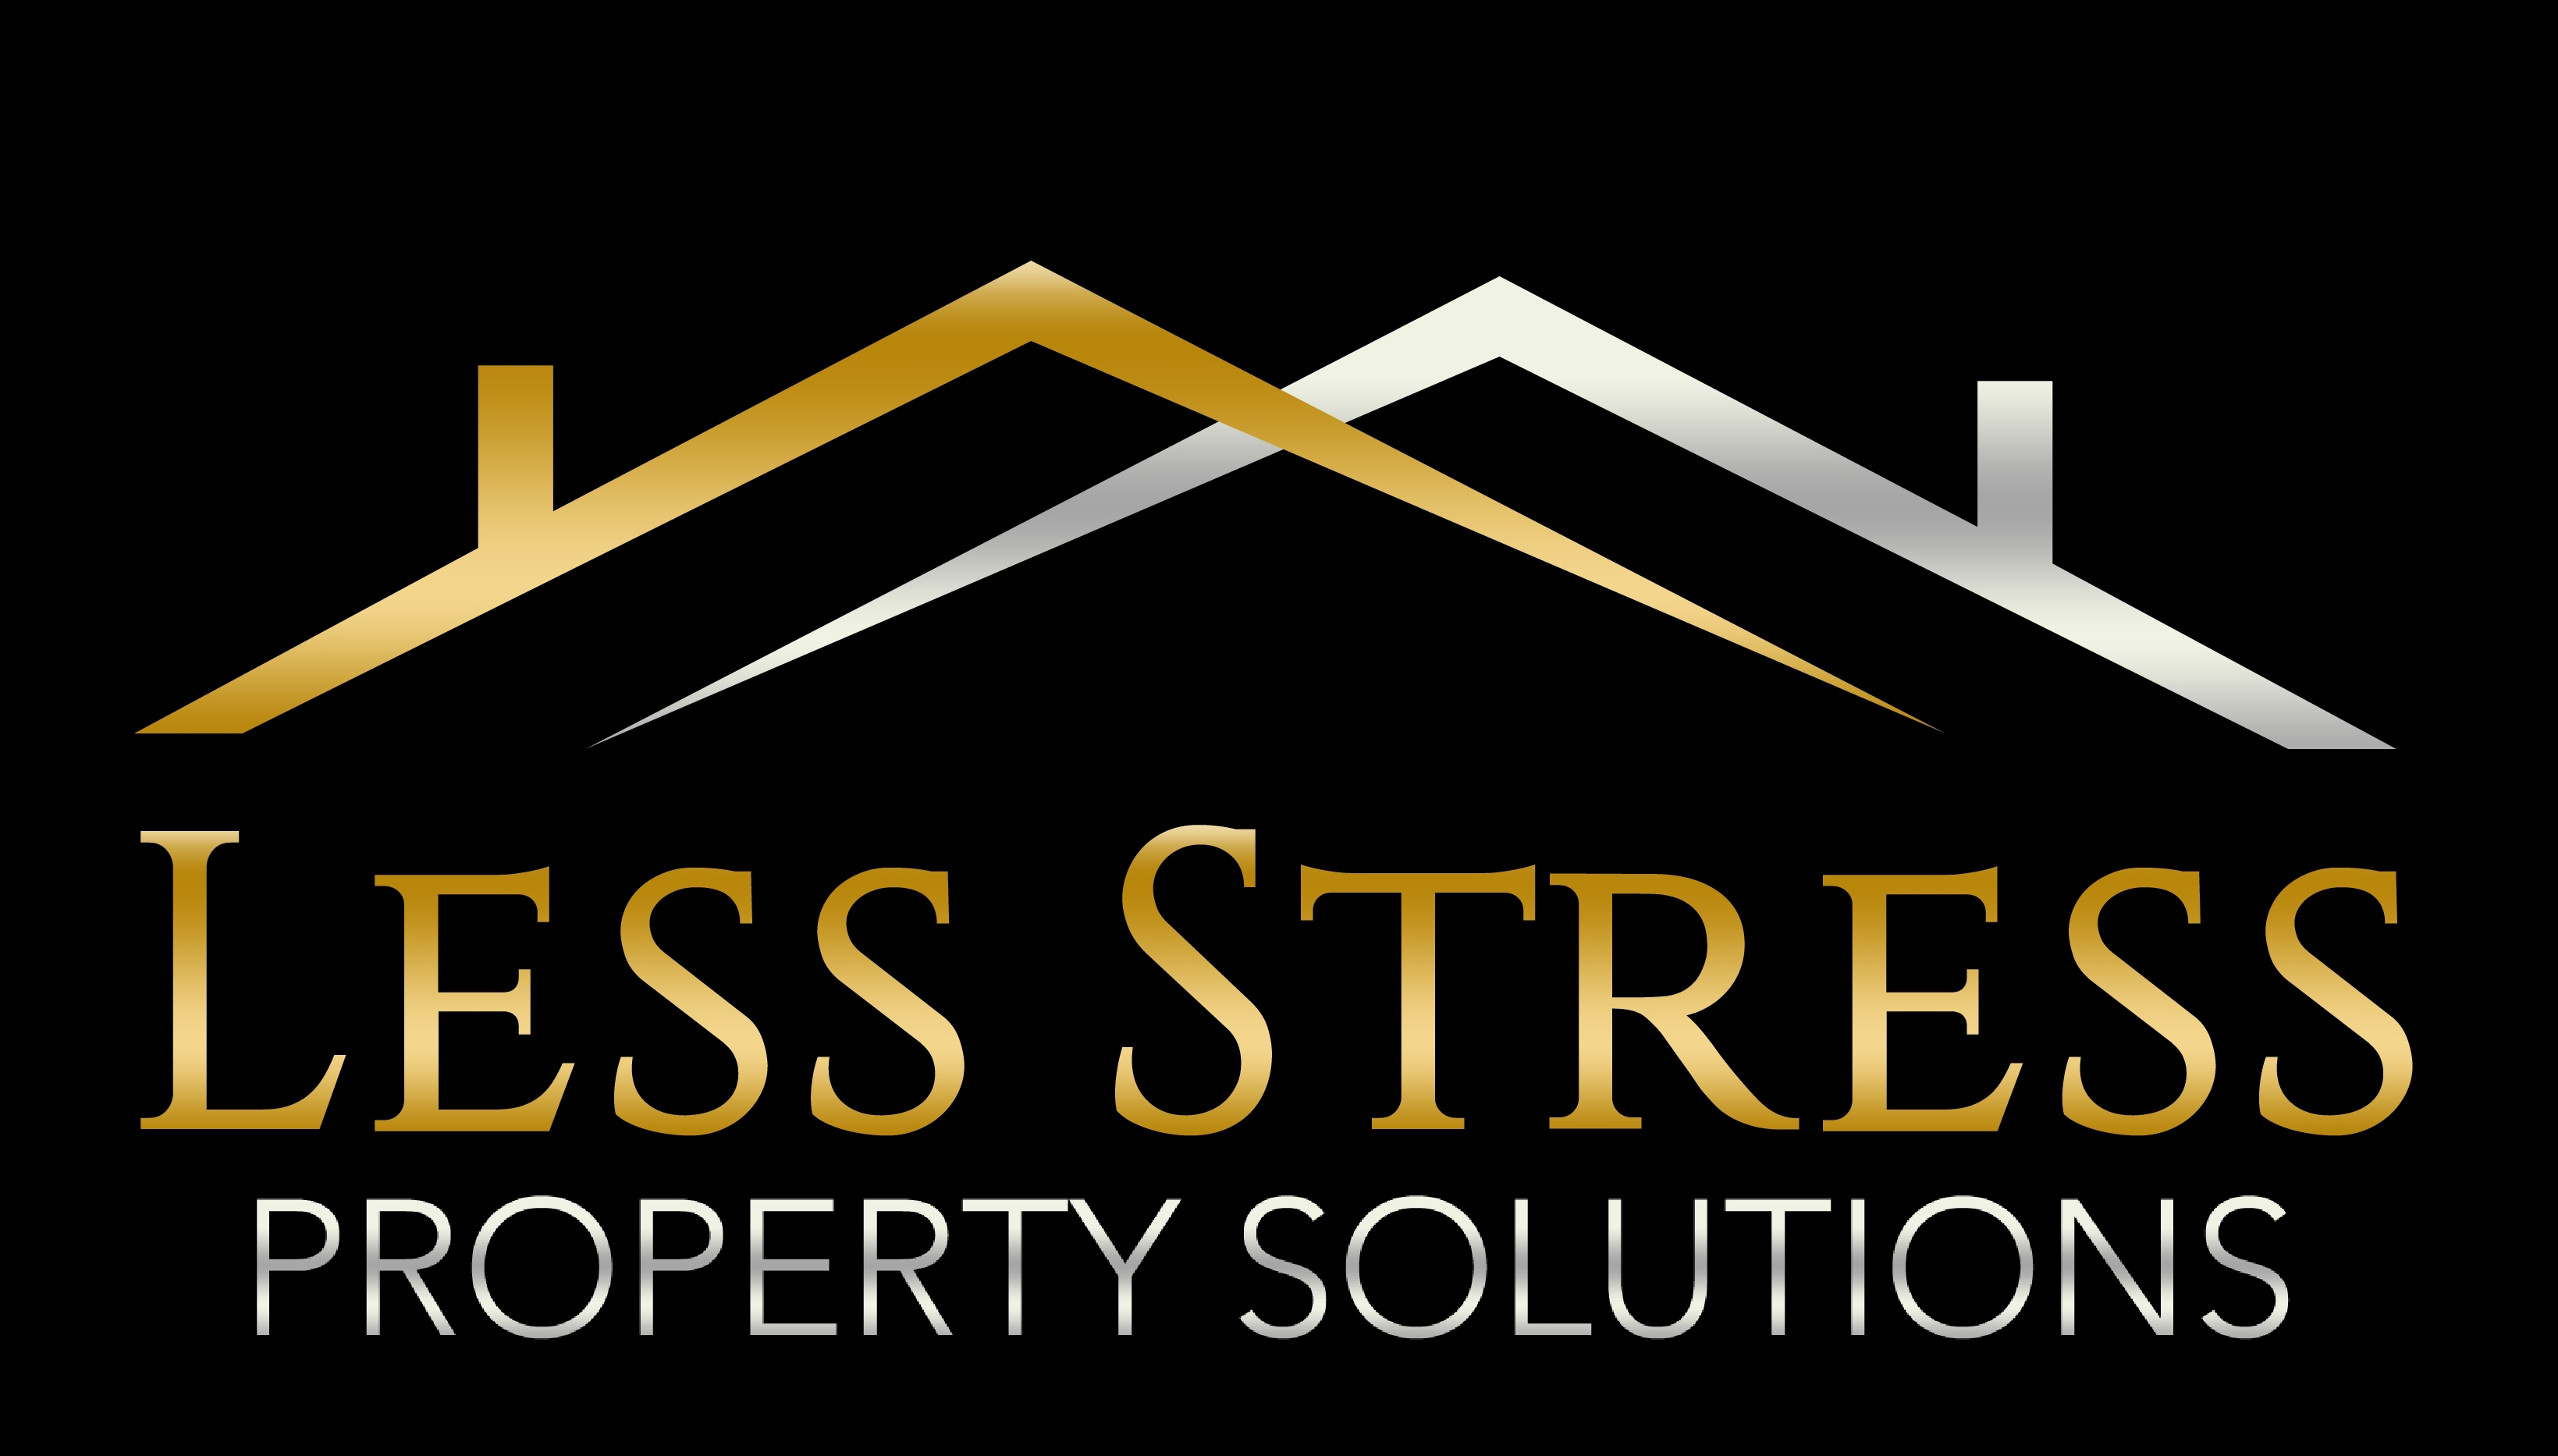 Less Stress Property Solutions LLC